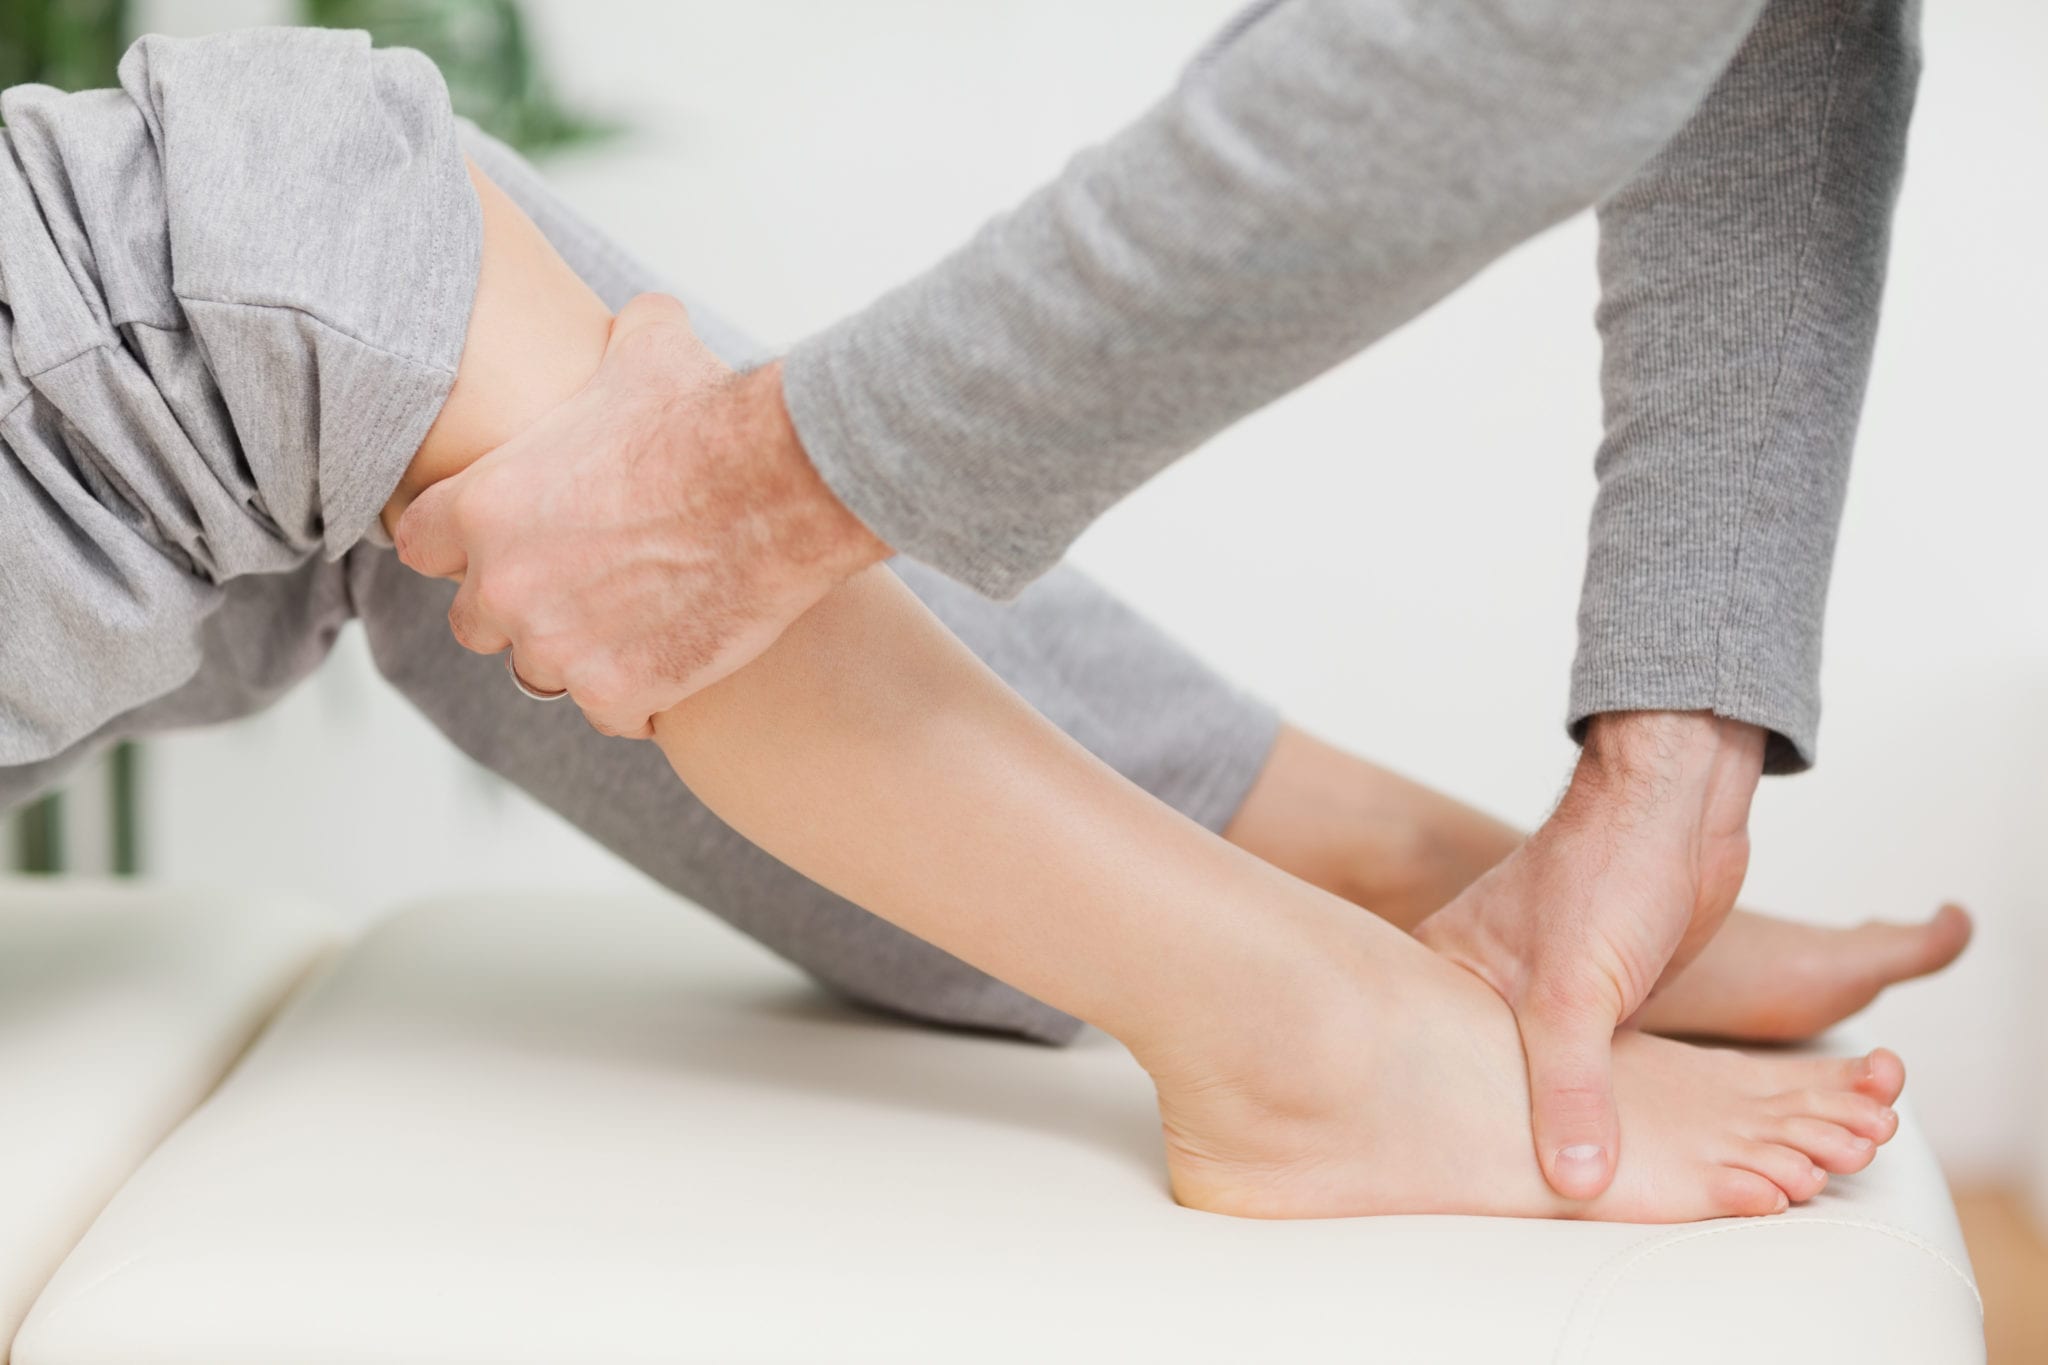 Dry Needling & Manipulation to Treat & Cure Plantar Fasciitis & Foot Pain